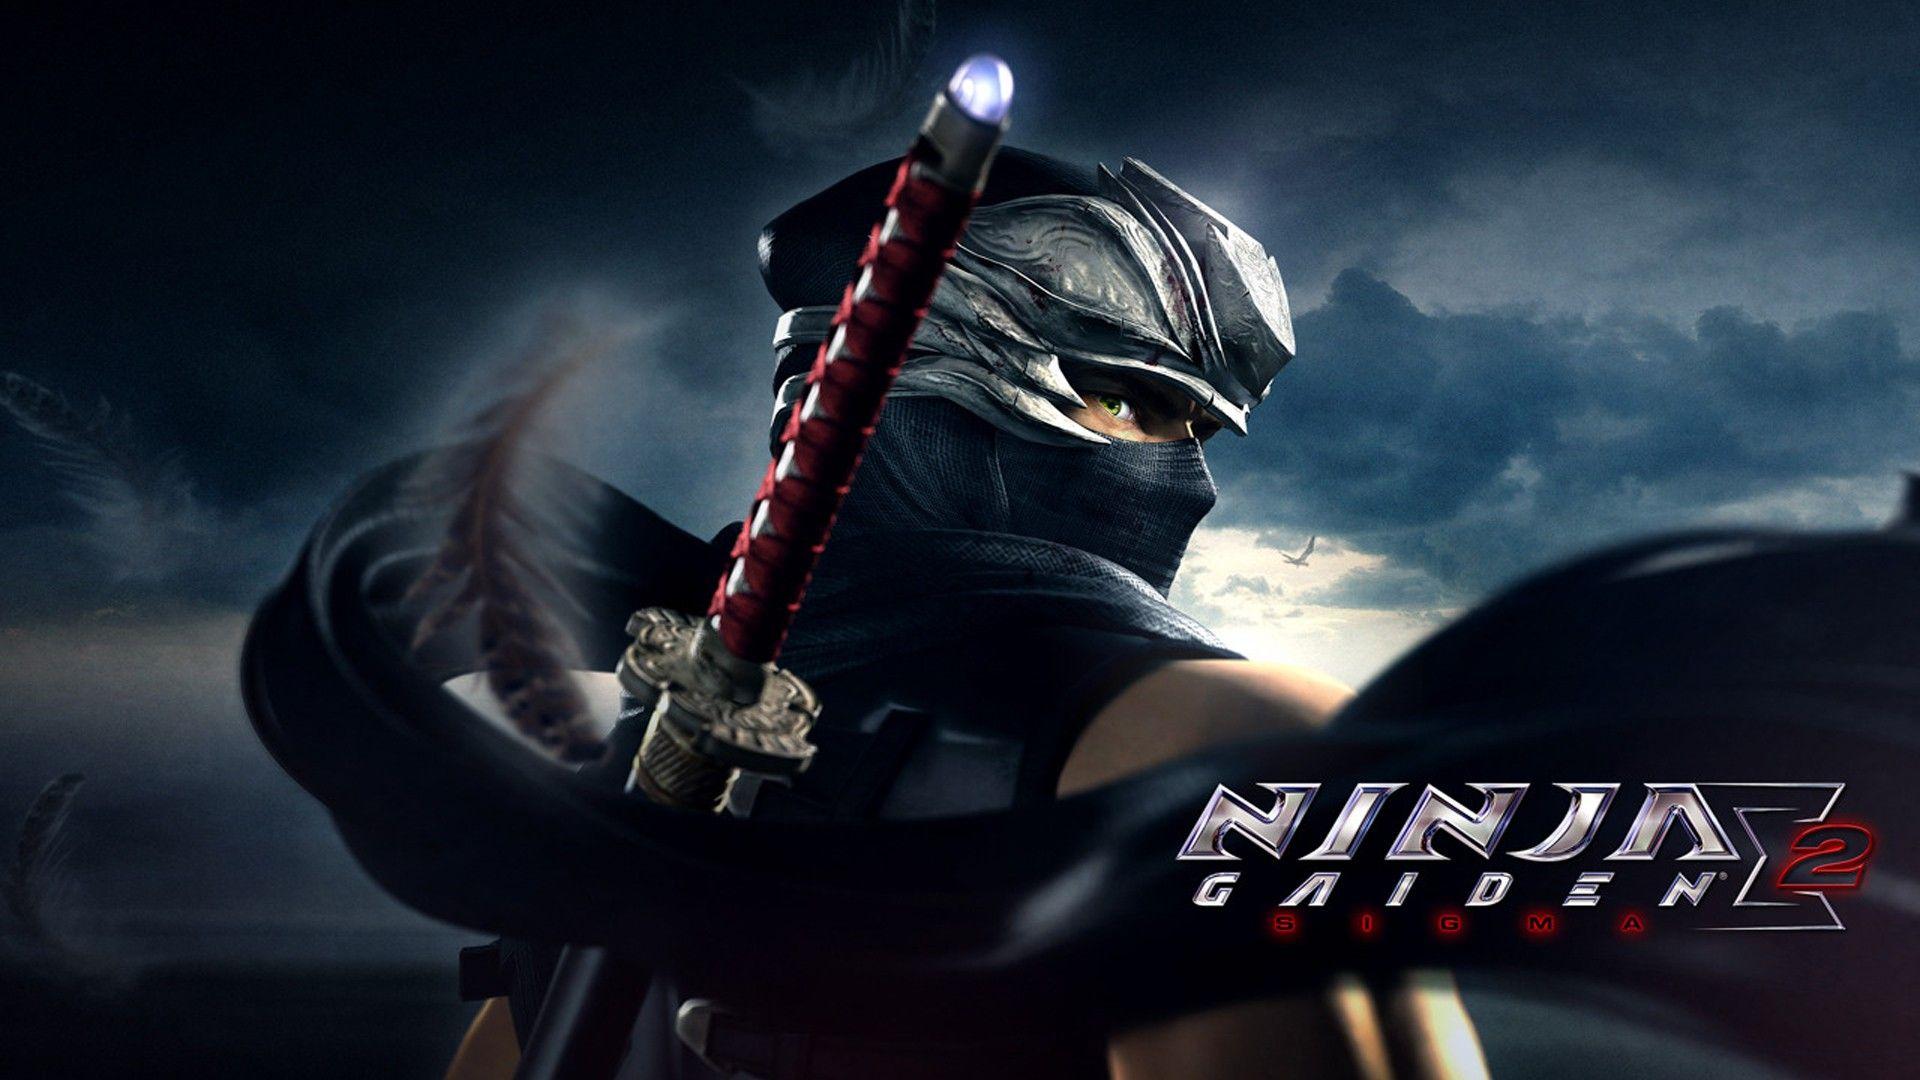 Ninja Gaiden Sigma 2 Full HD Bakgrund and Bakgrundx1080